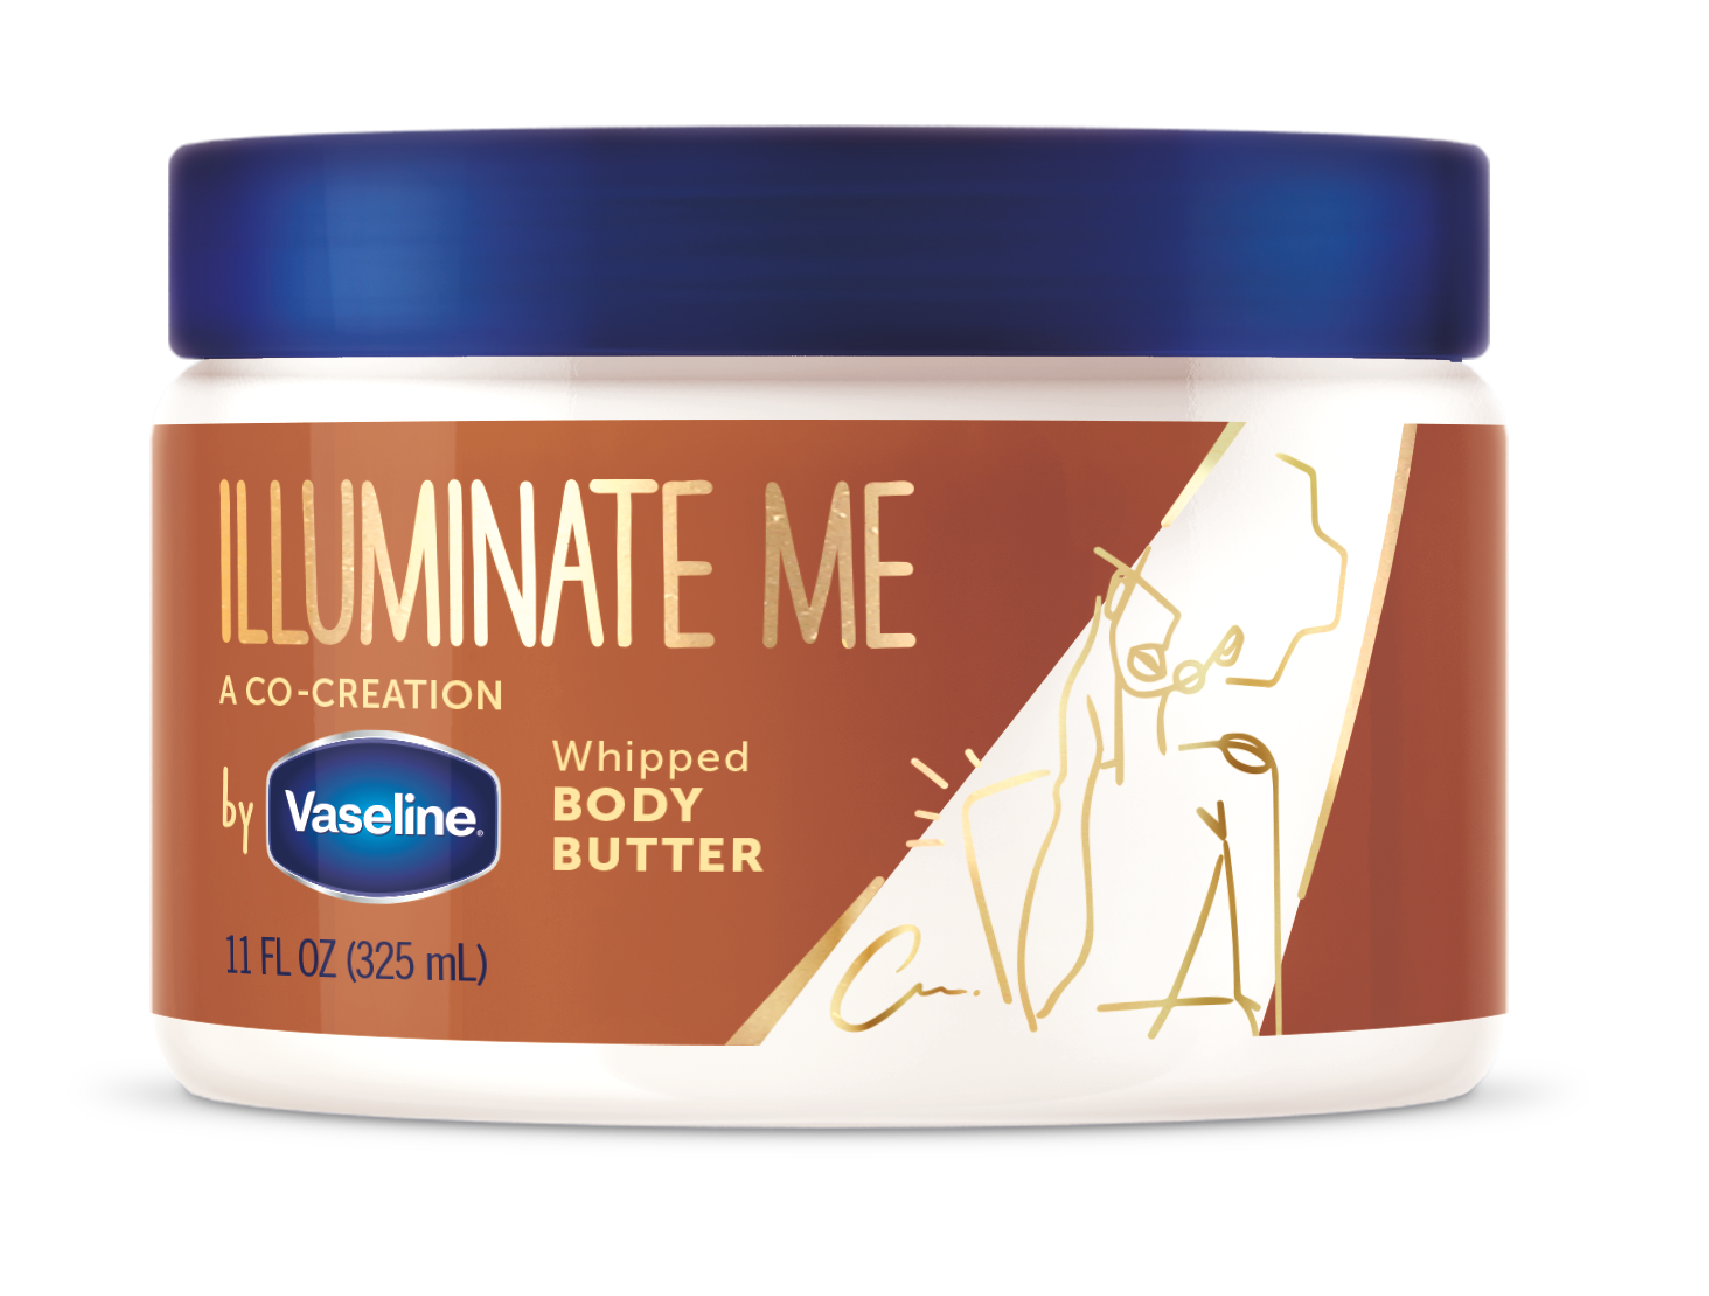 vaseline illuminate me body oil near me